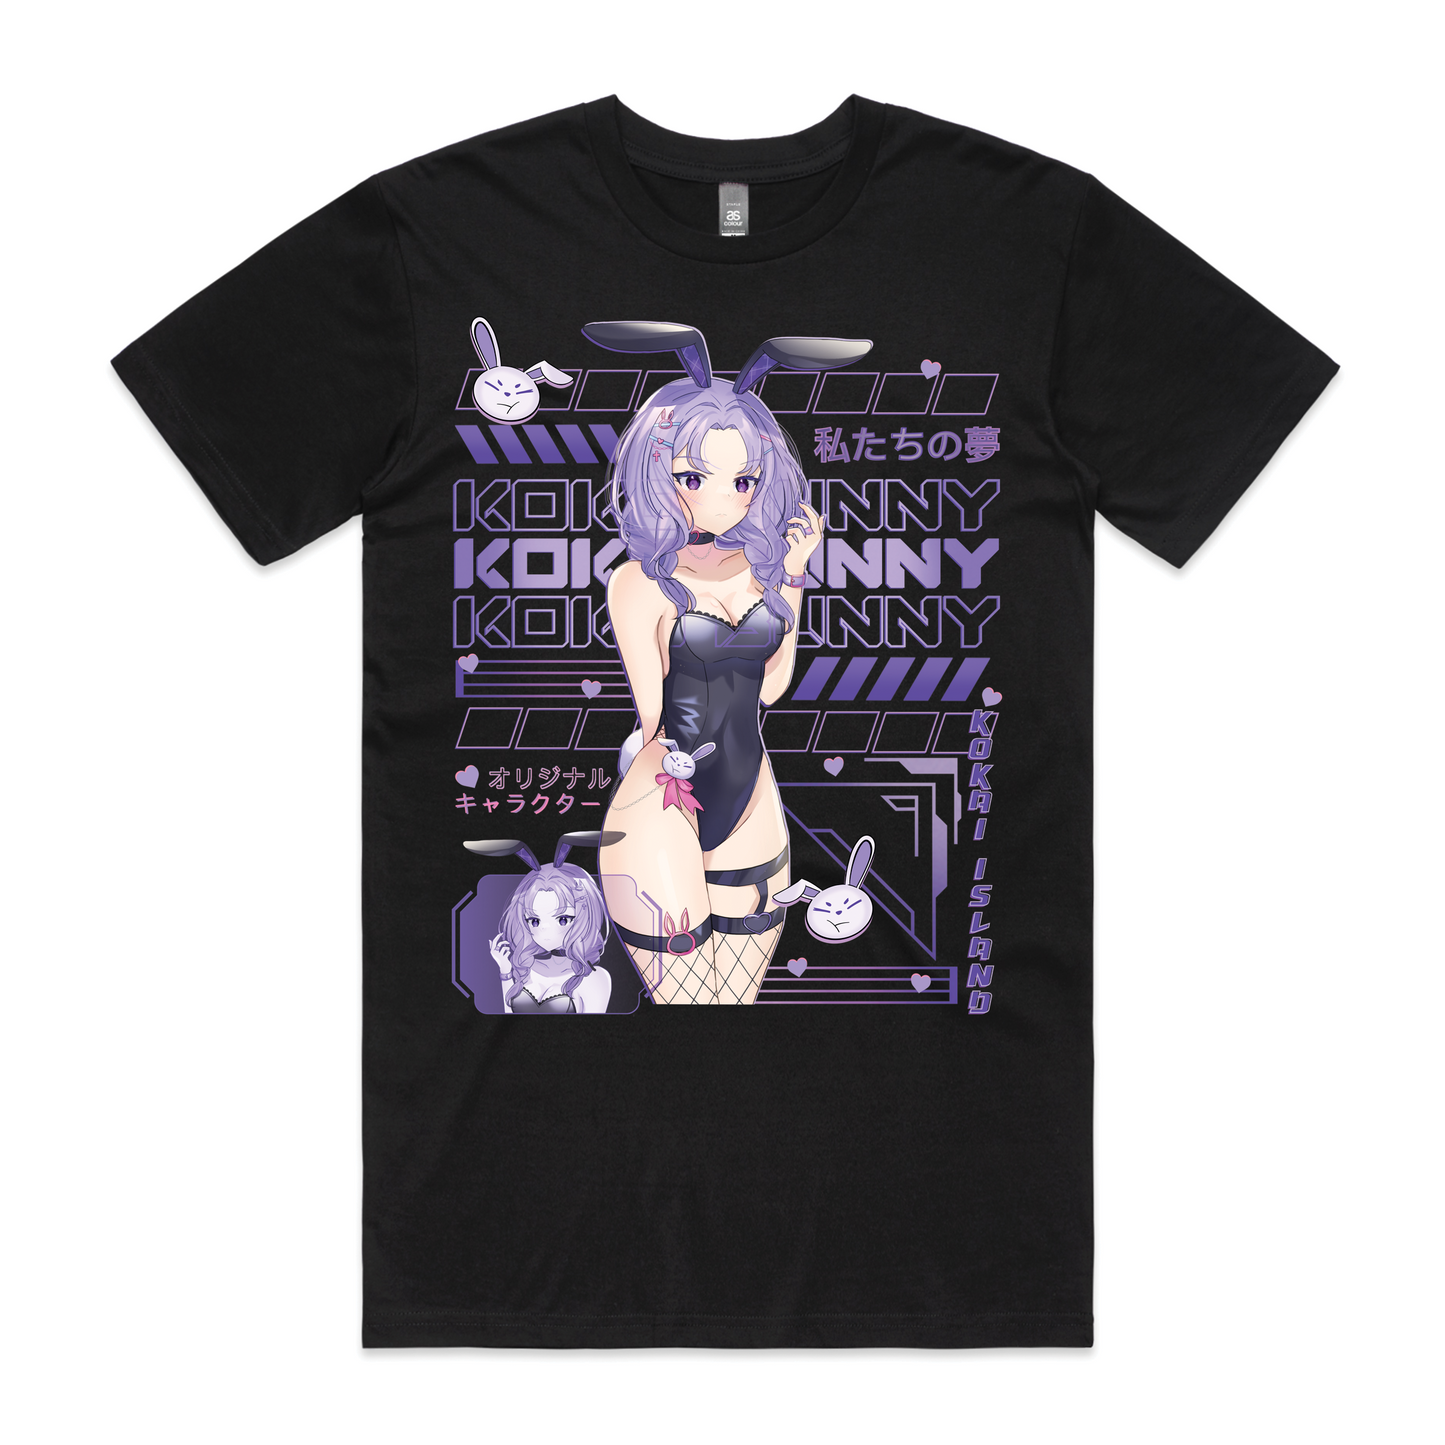 Koko Bunny T-Shirt